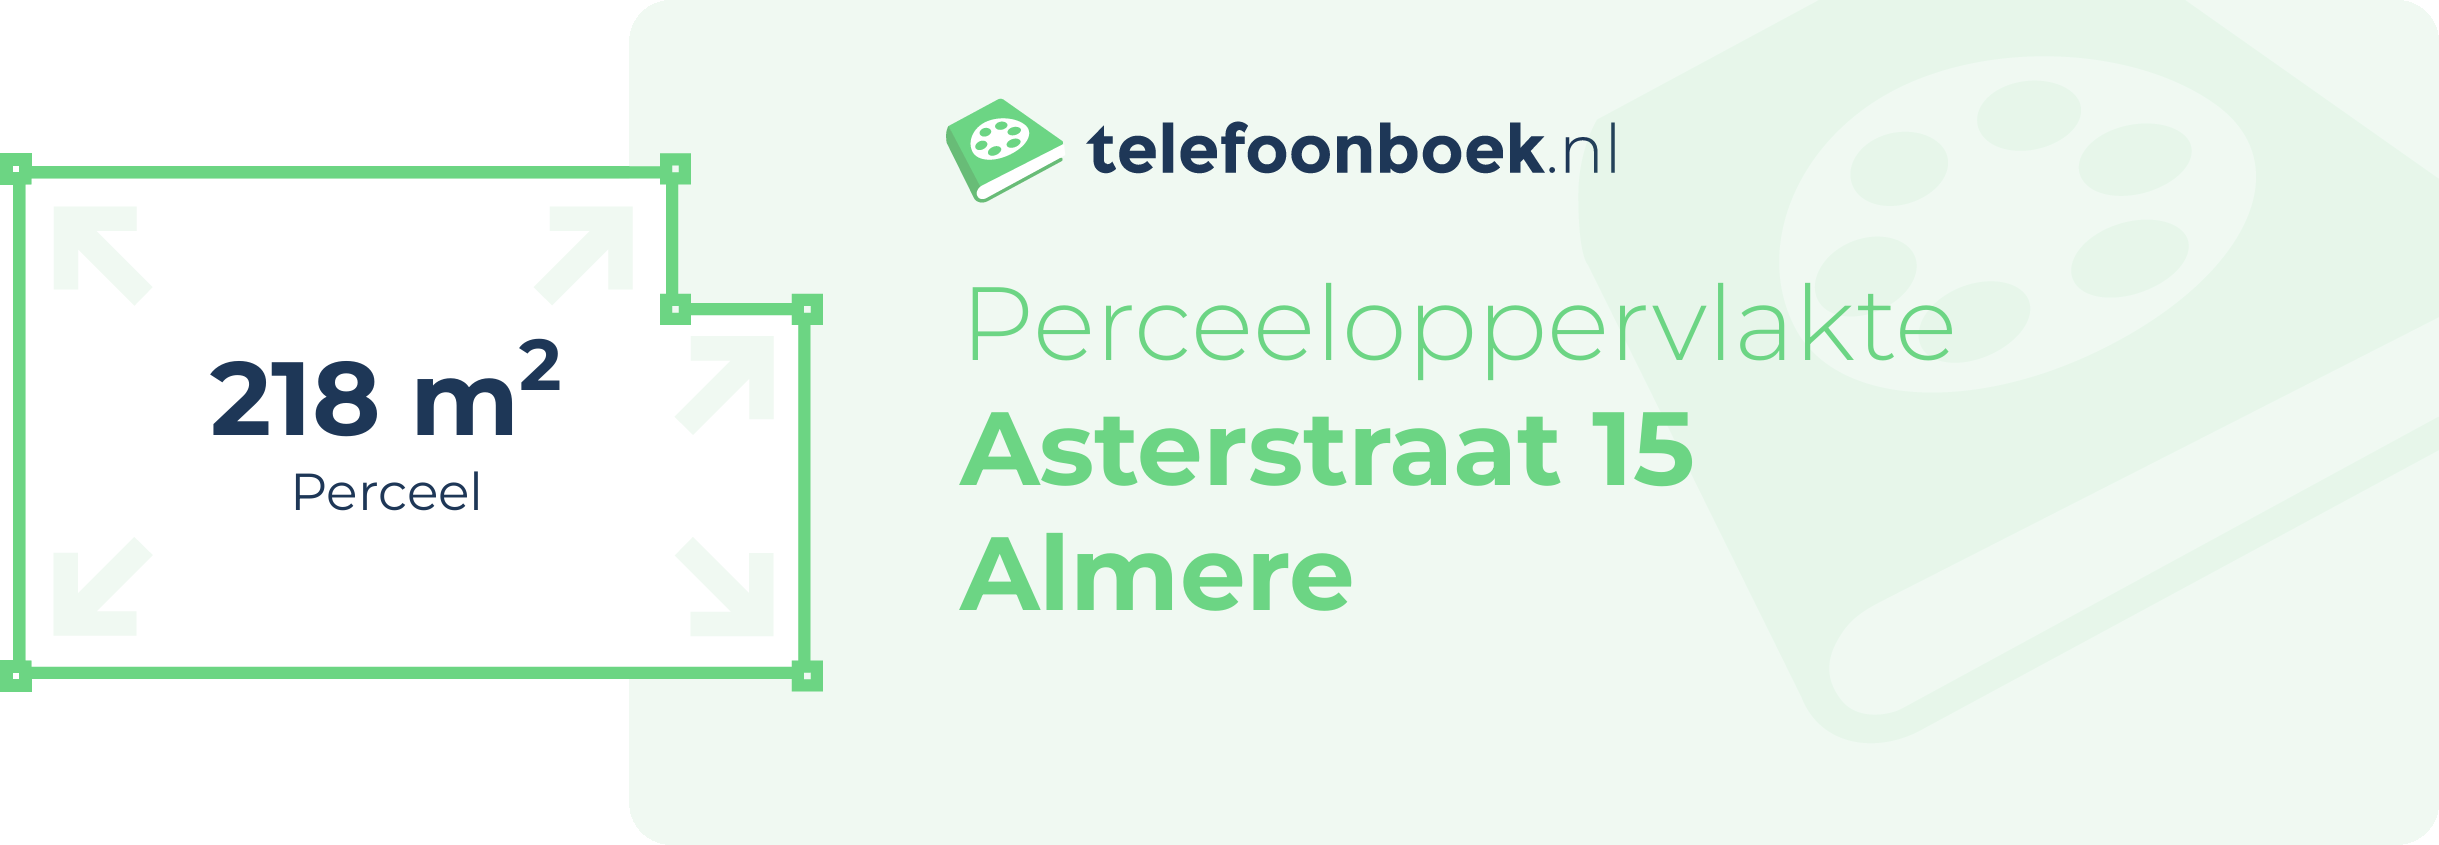 Perceeloppervlakte Asterstraat 15 Almere